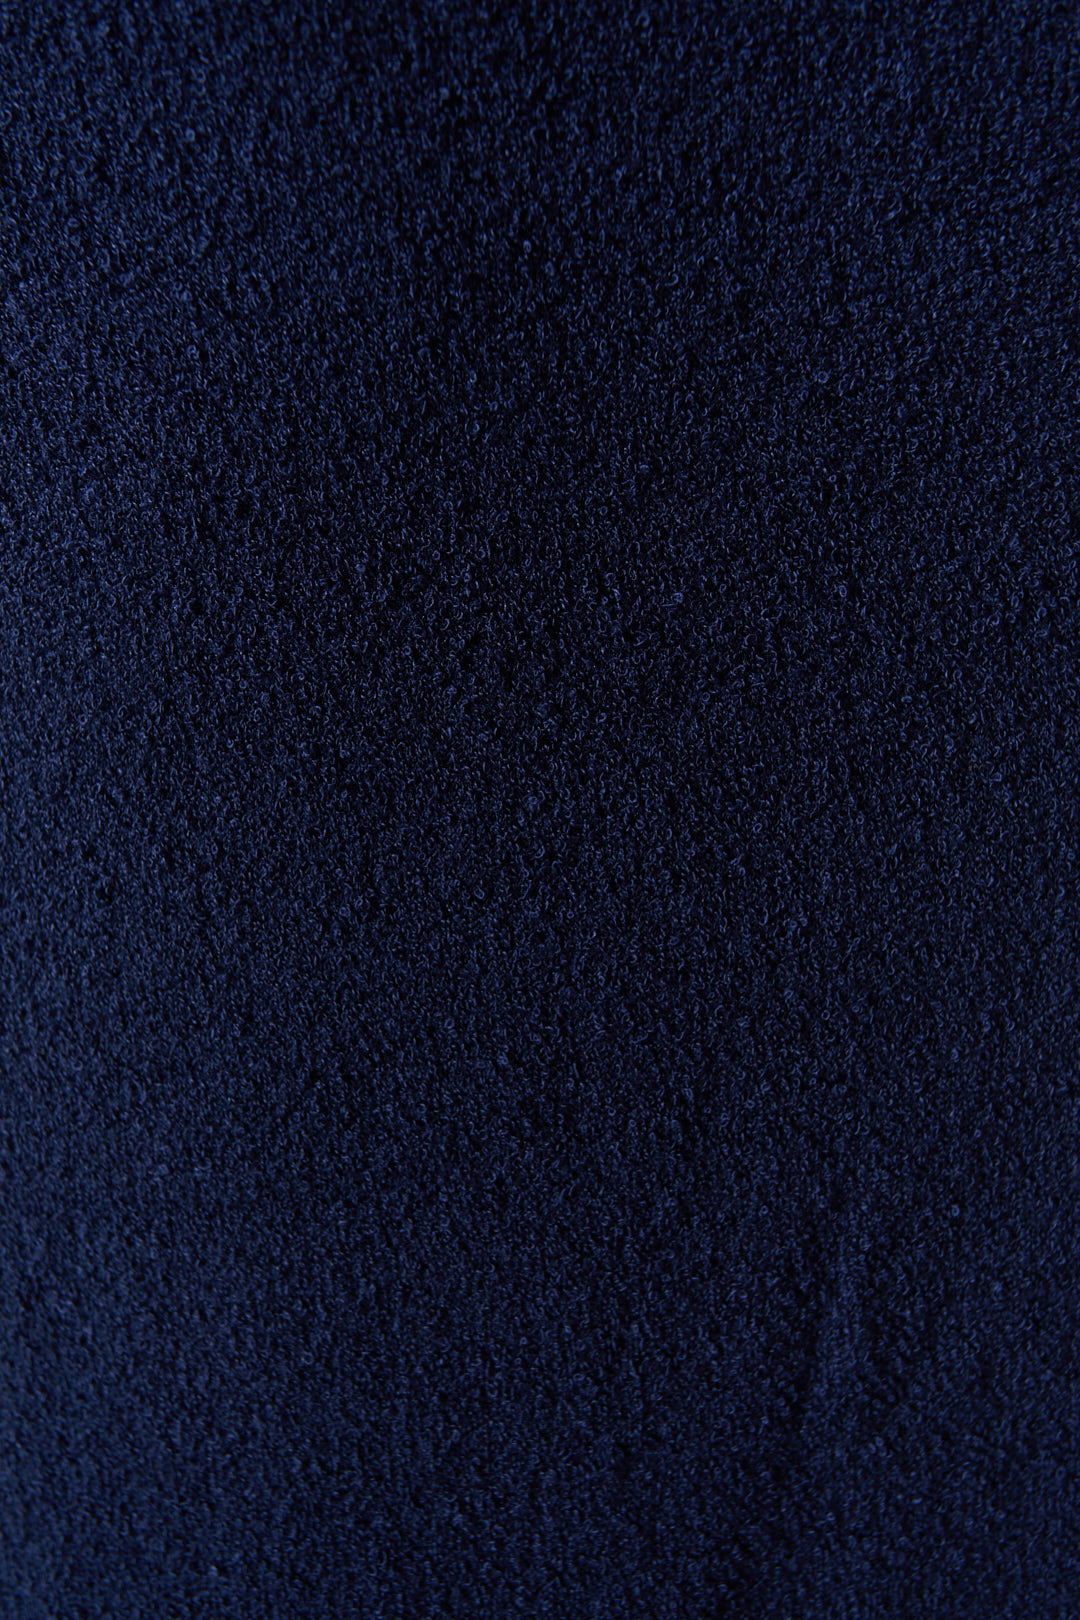 Navy blue knit sweater | Solange